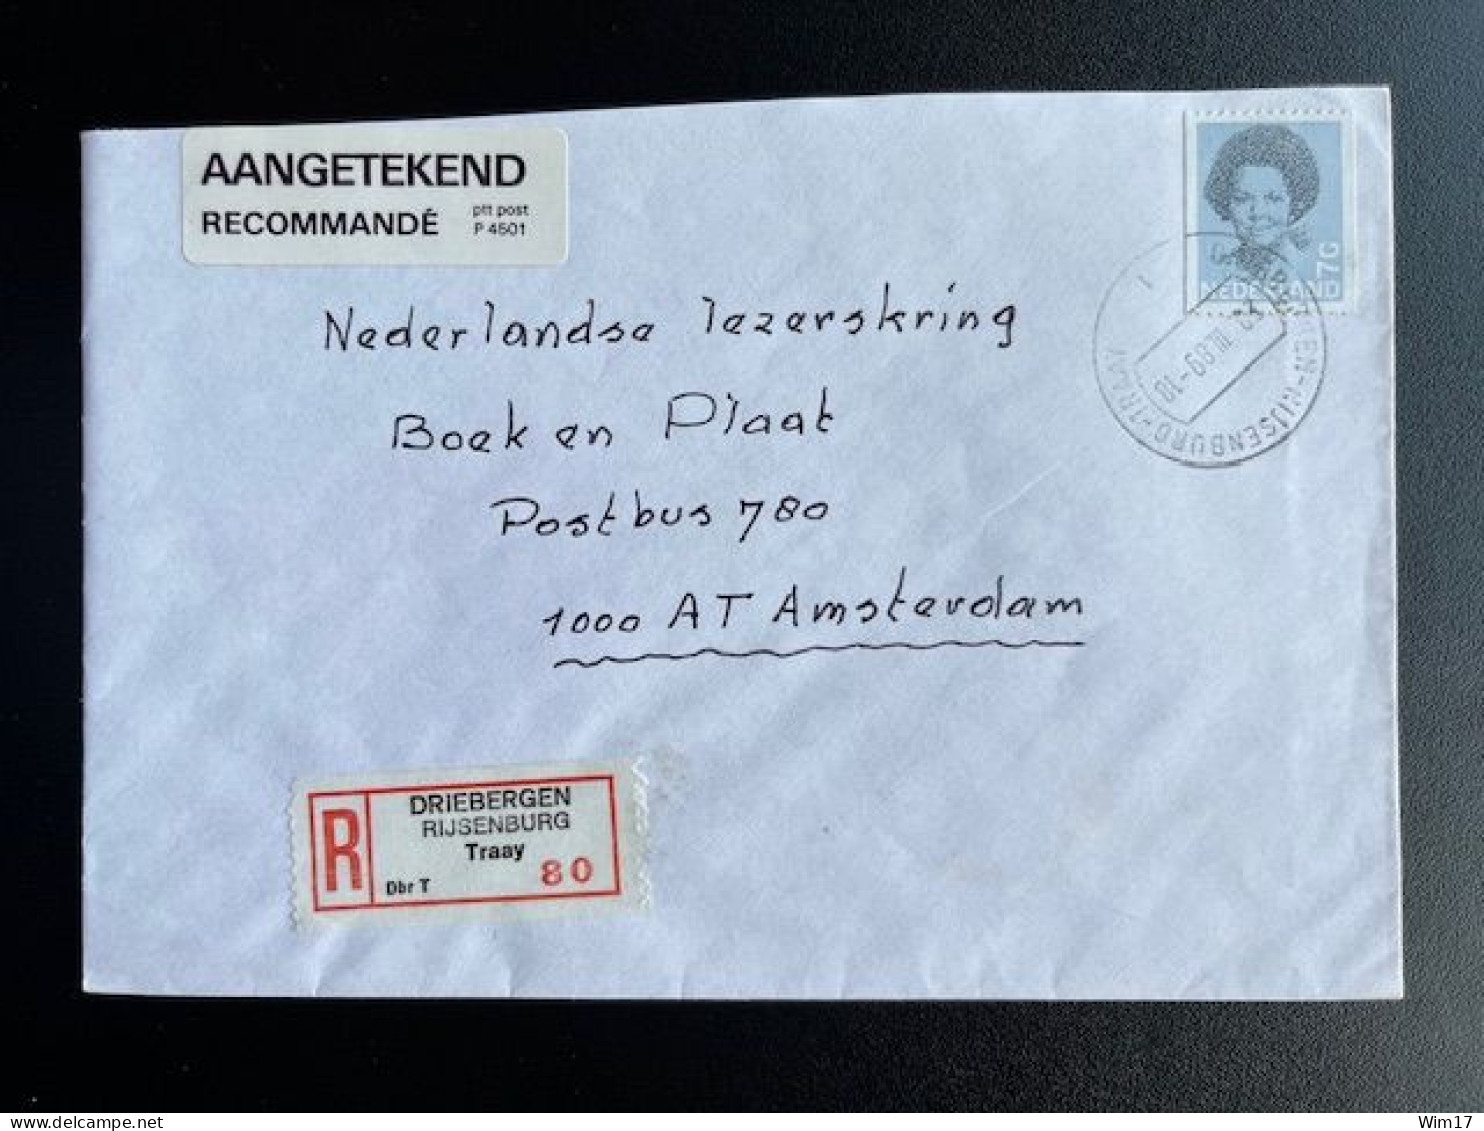 NETHERLANDS 1989 REGISTERED LETTER DRIEBERGEN RIJSENBURG TRAAY TO AMSTERDAM 28-03-1989 NEDERLAND AANGETEKEND - Covers & Documents